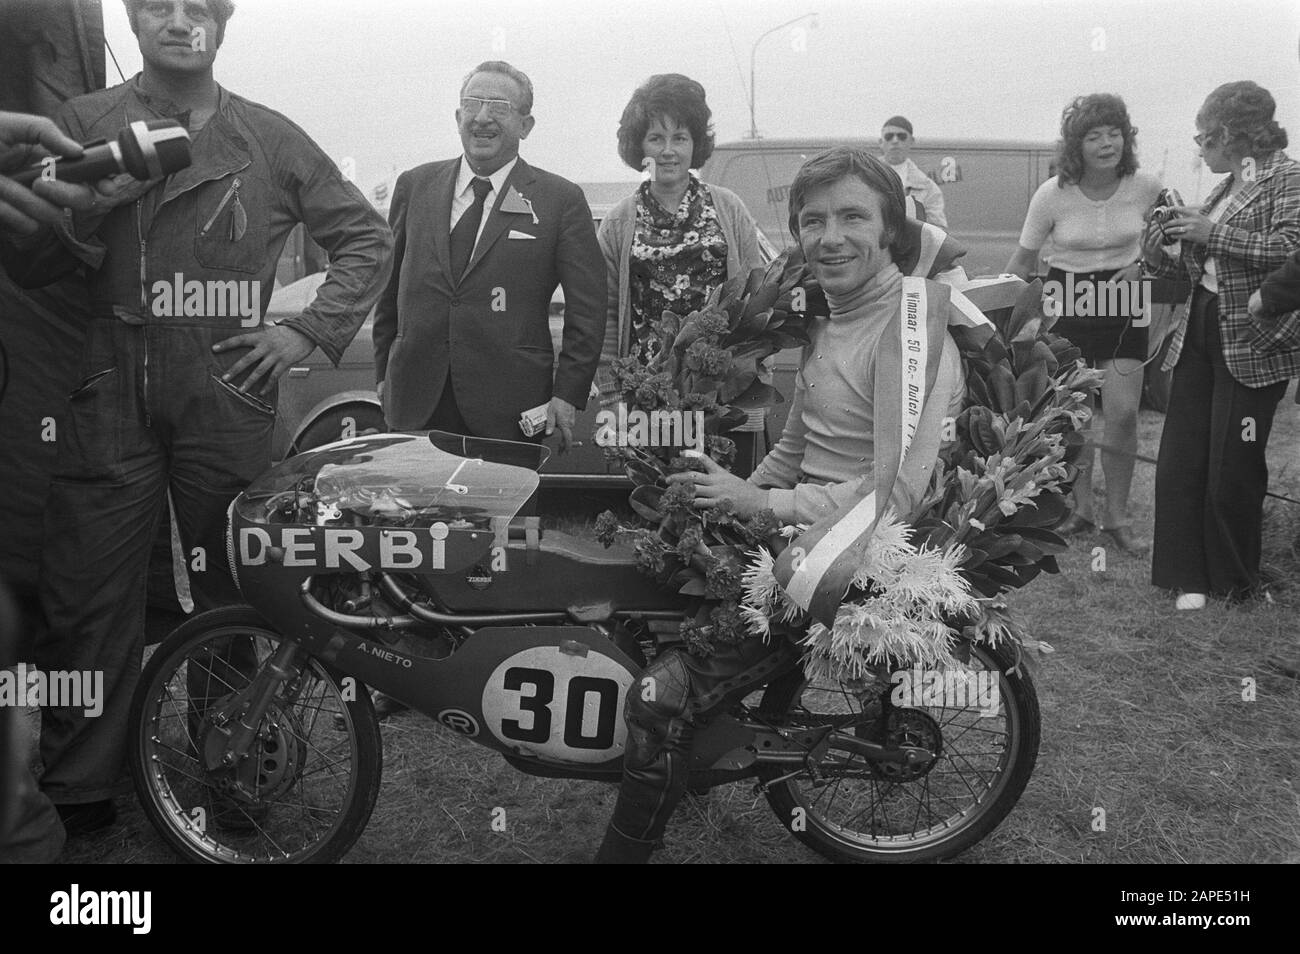 Español: Ángel Nieto con la Derbi 50cc in Assen, 1972 The Spanish motorcycle driver Angel Nieto wins in the 50cc class on his Derbi; Stock Photo